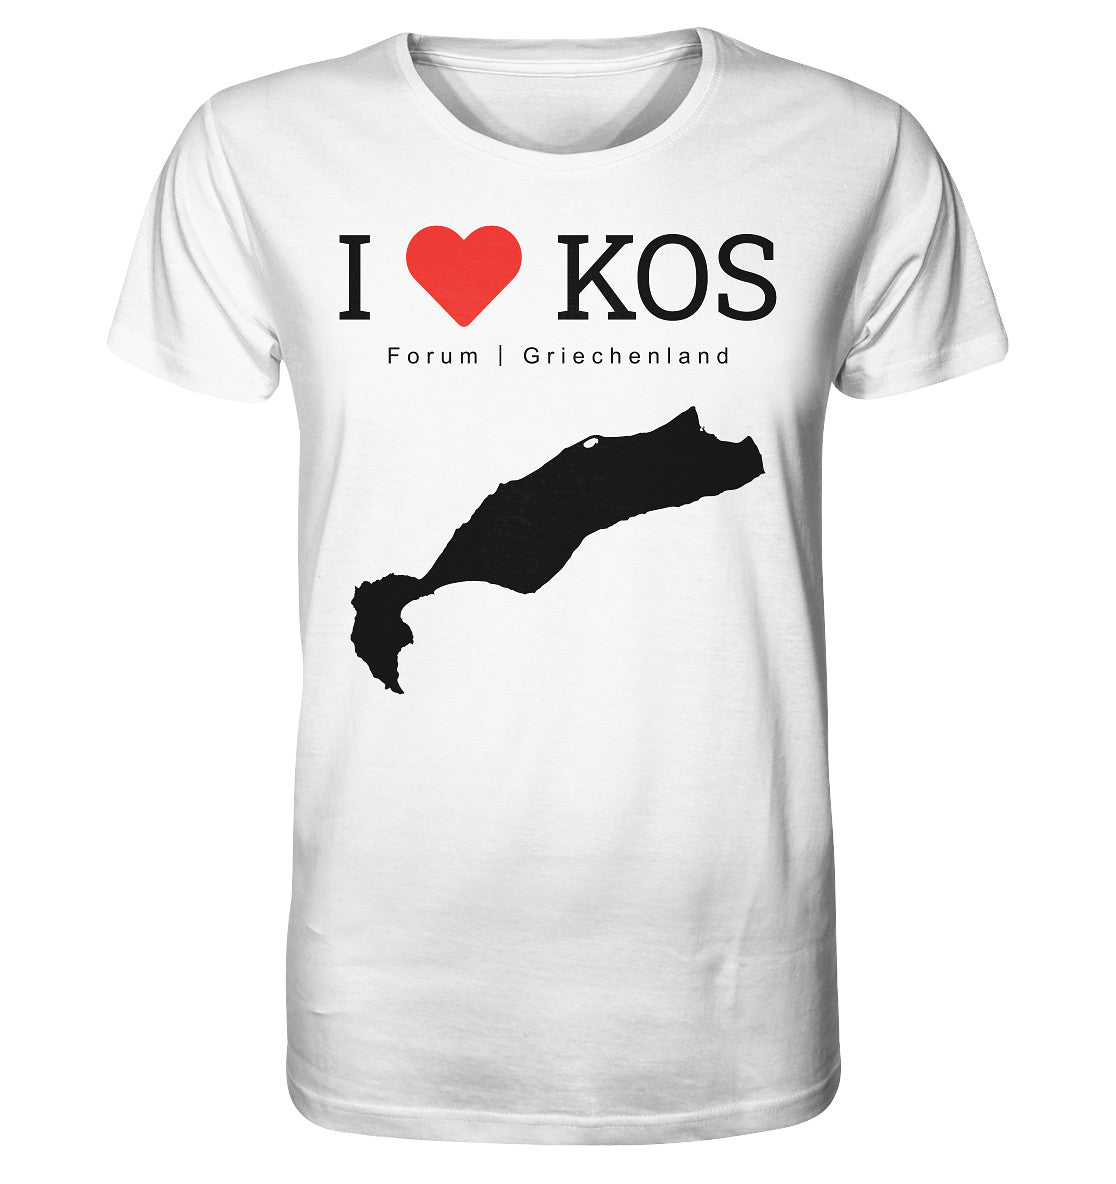 I LOVE KOS - Forum Griechenland Black - Organic Shirt